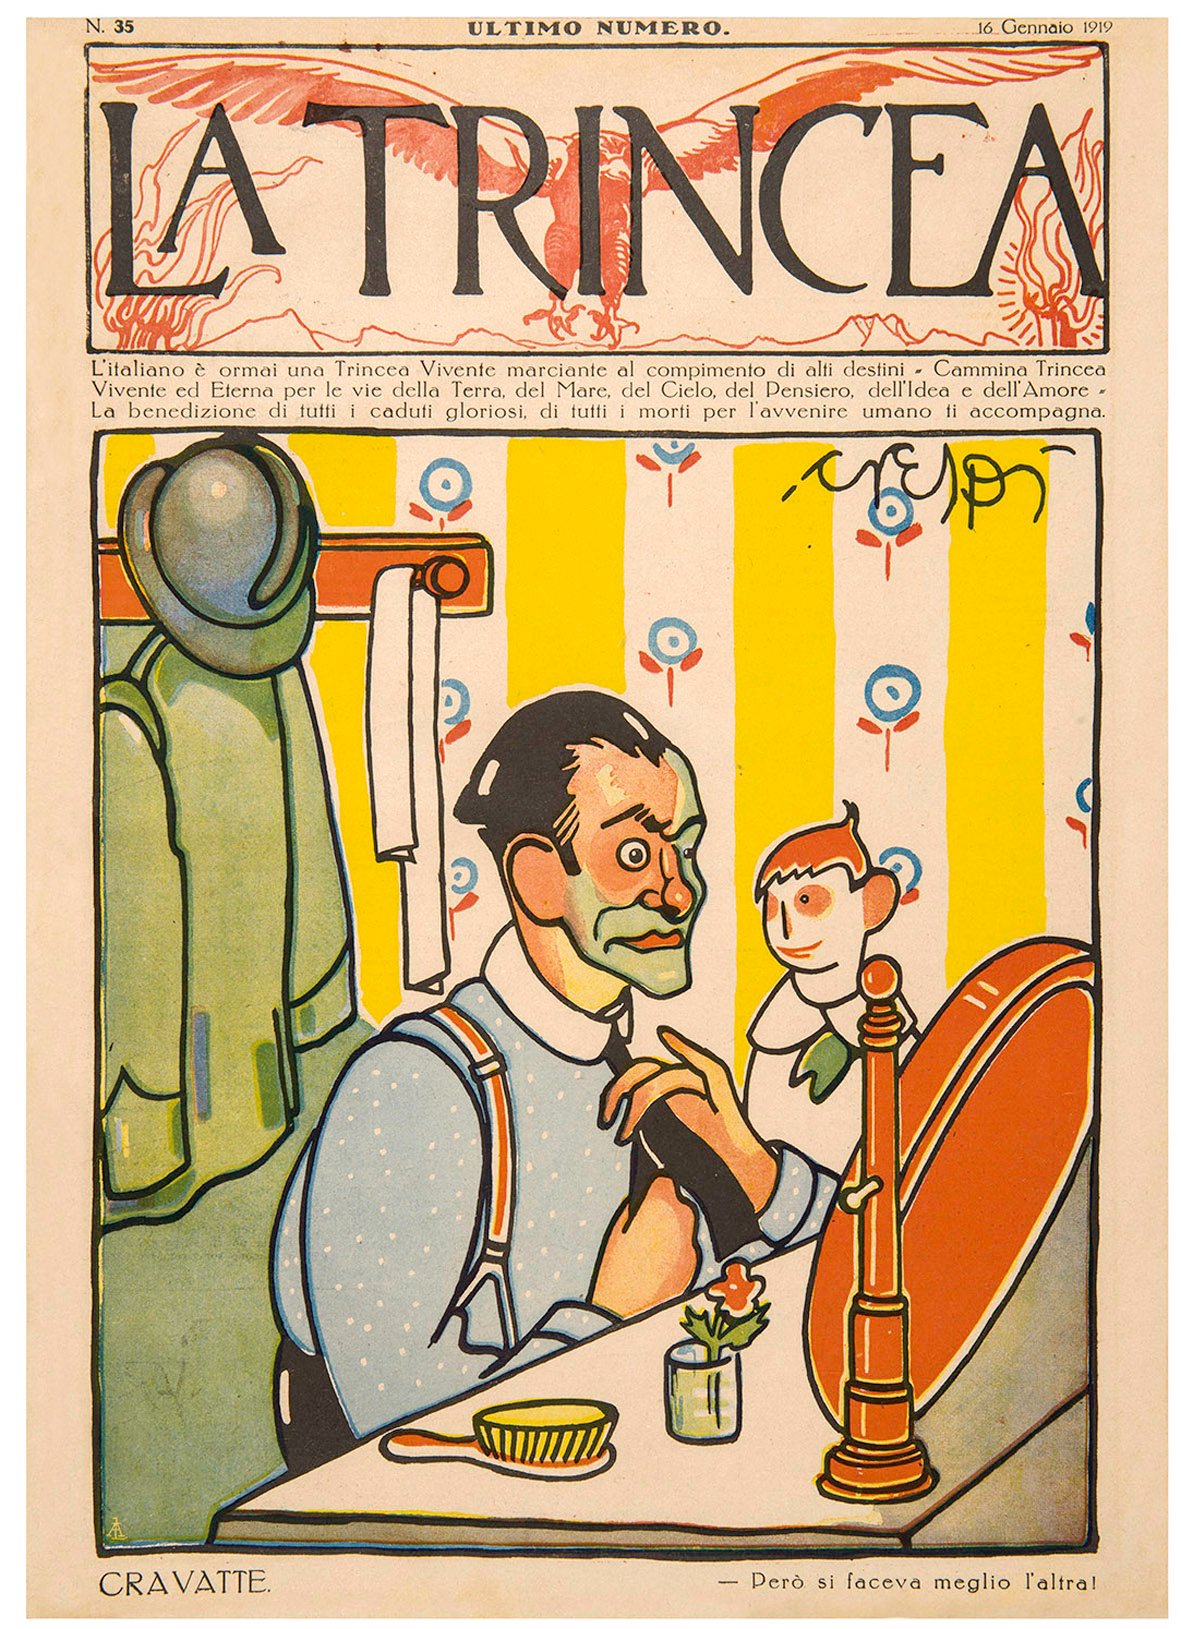 Luigi Daniele Crespi, Cravatte, copertina de “La Trincea” n. 35, 16 gennaio 1919